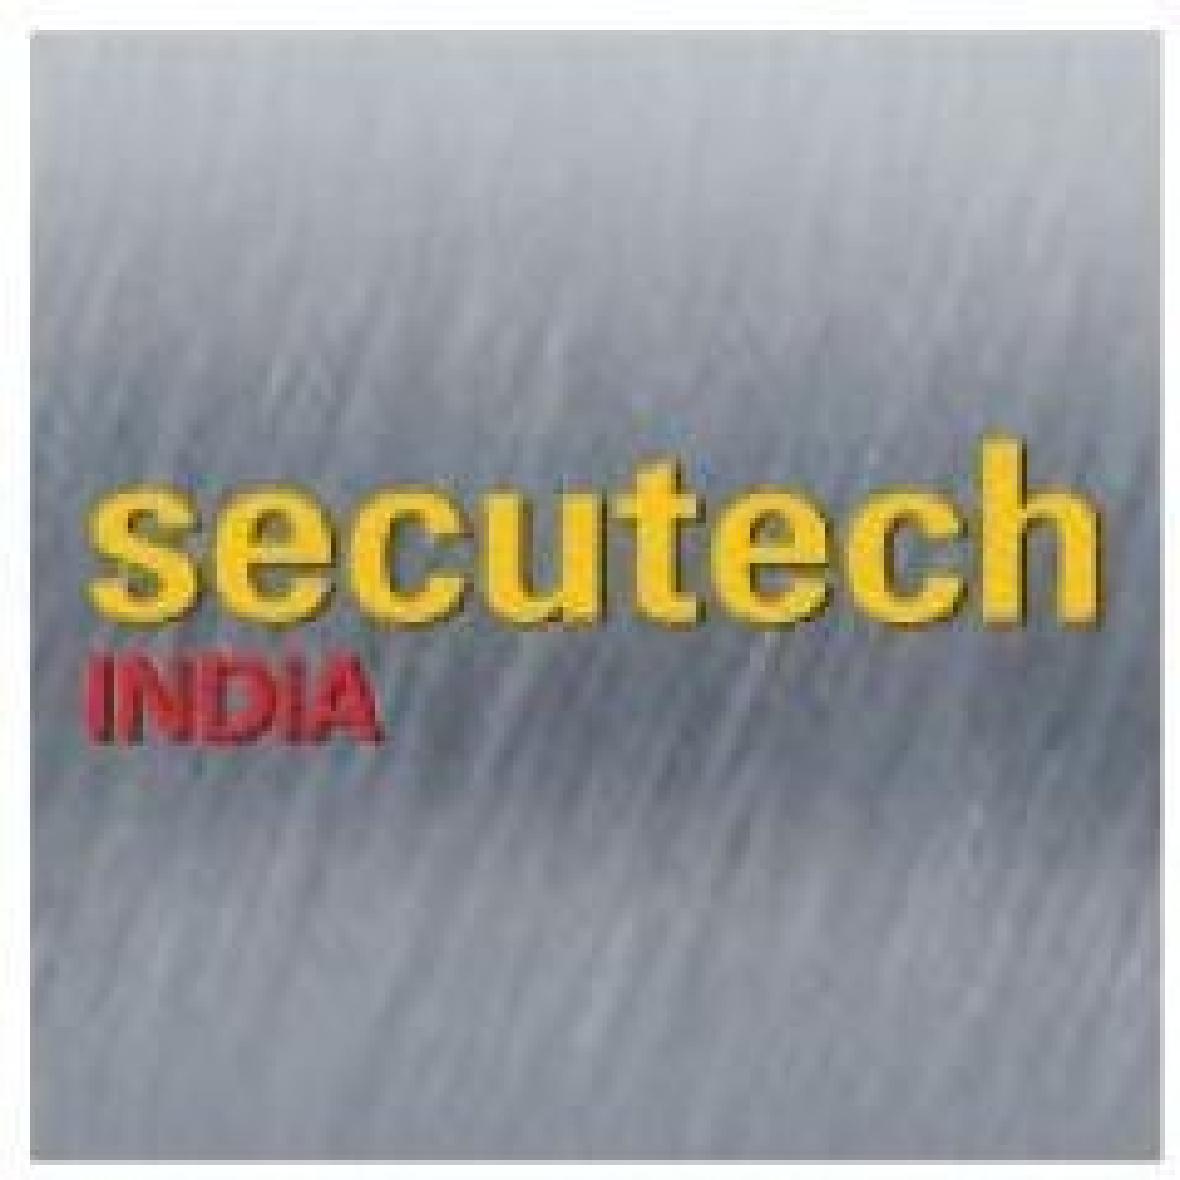 Secutech India 2019